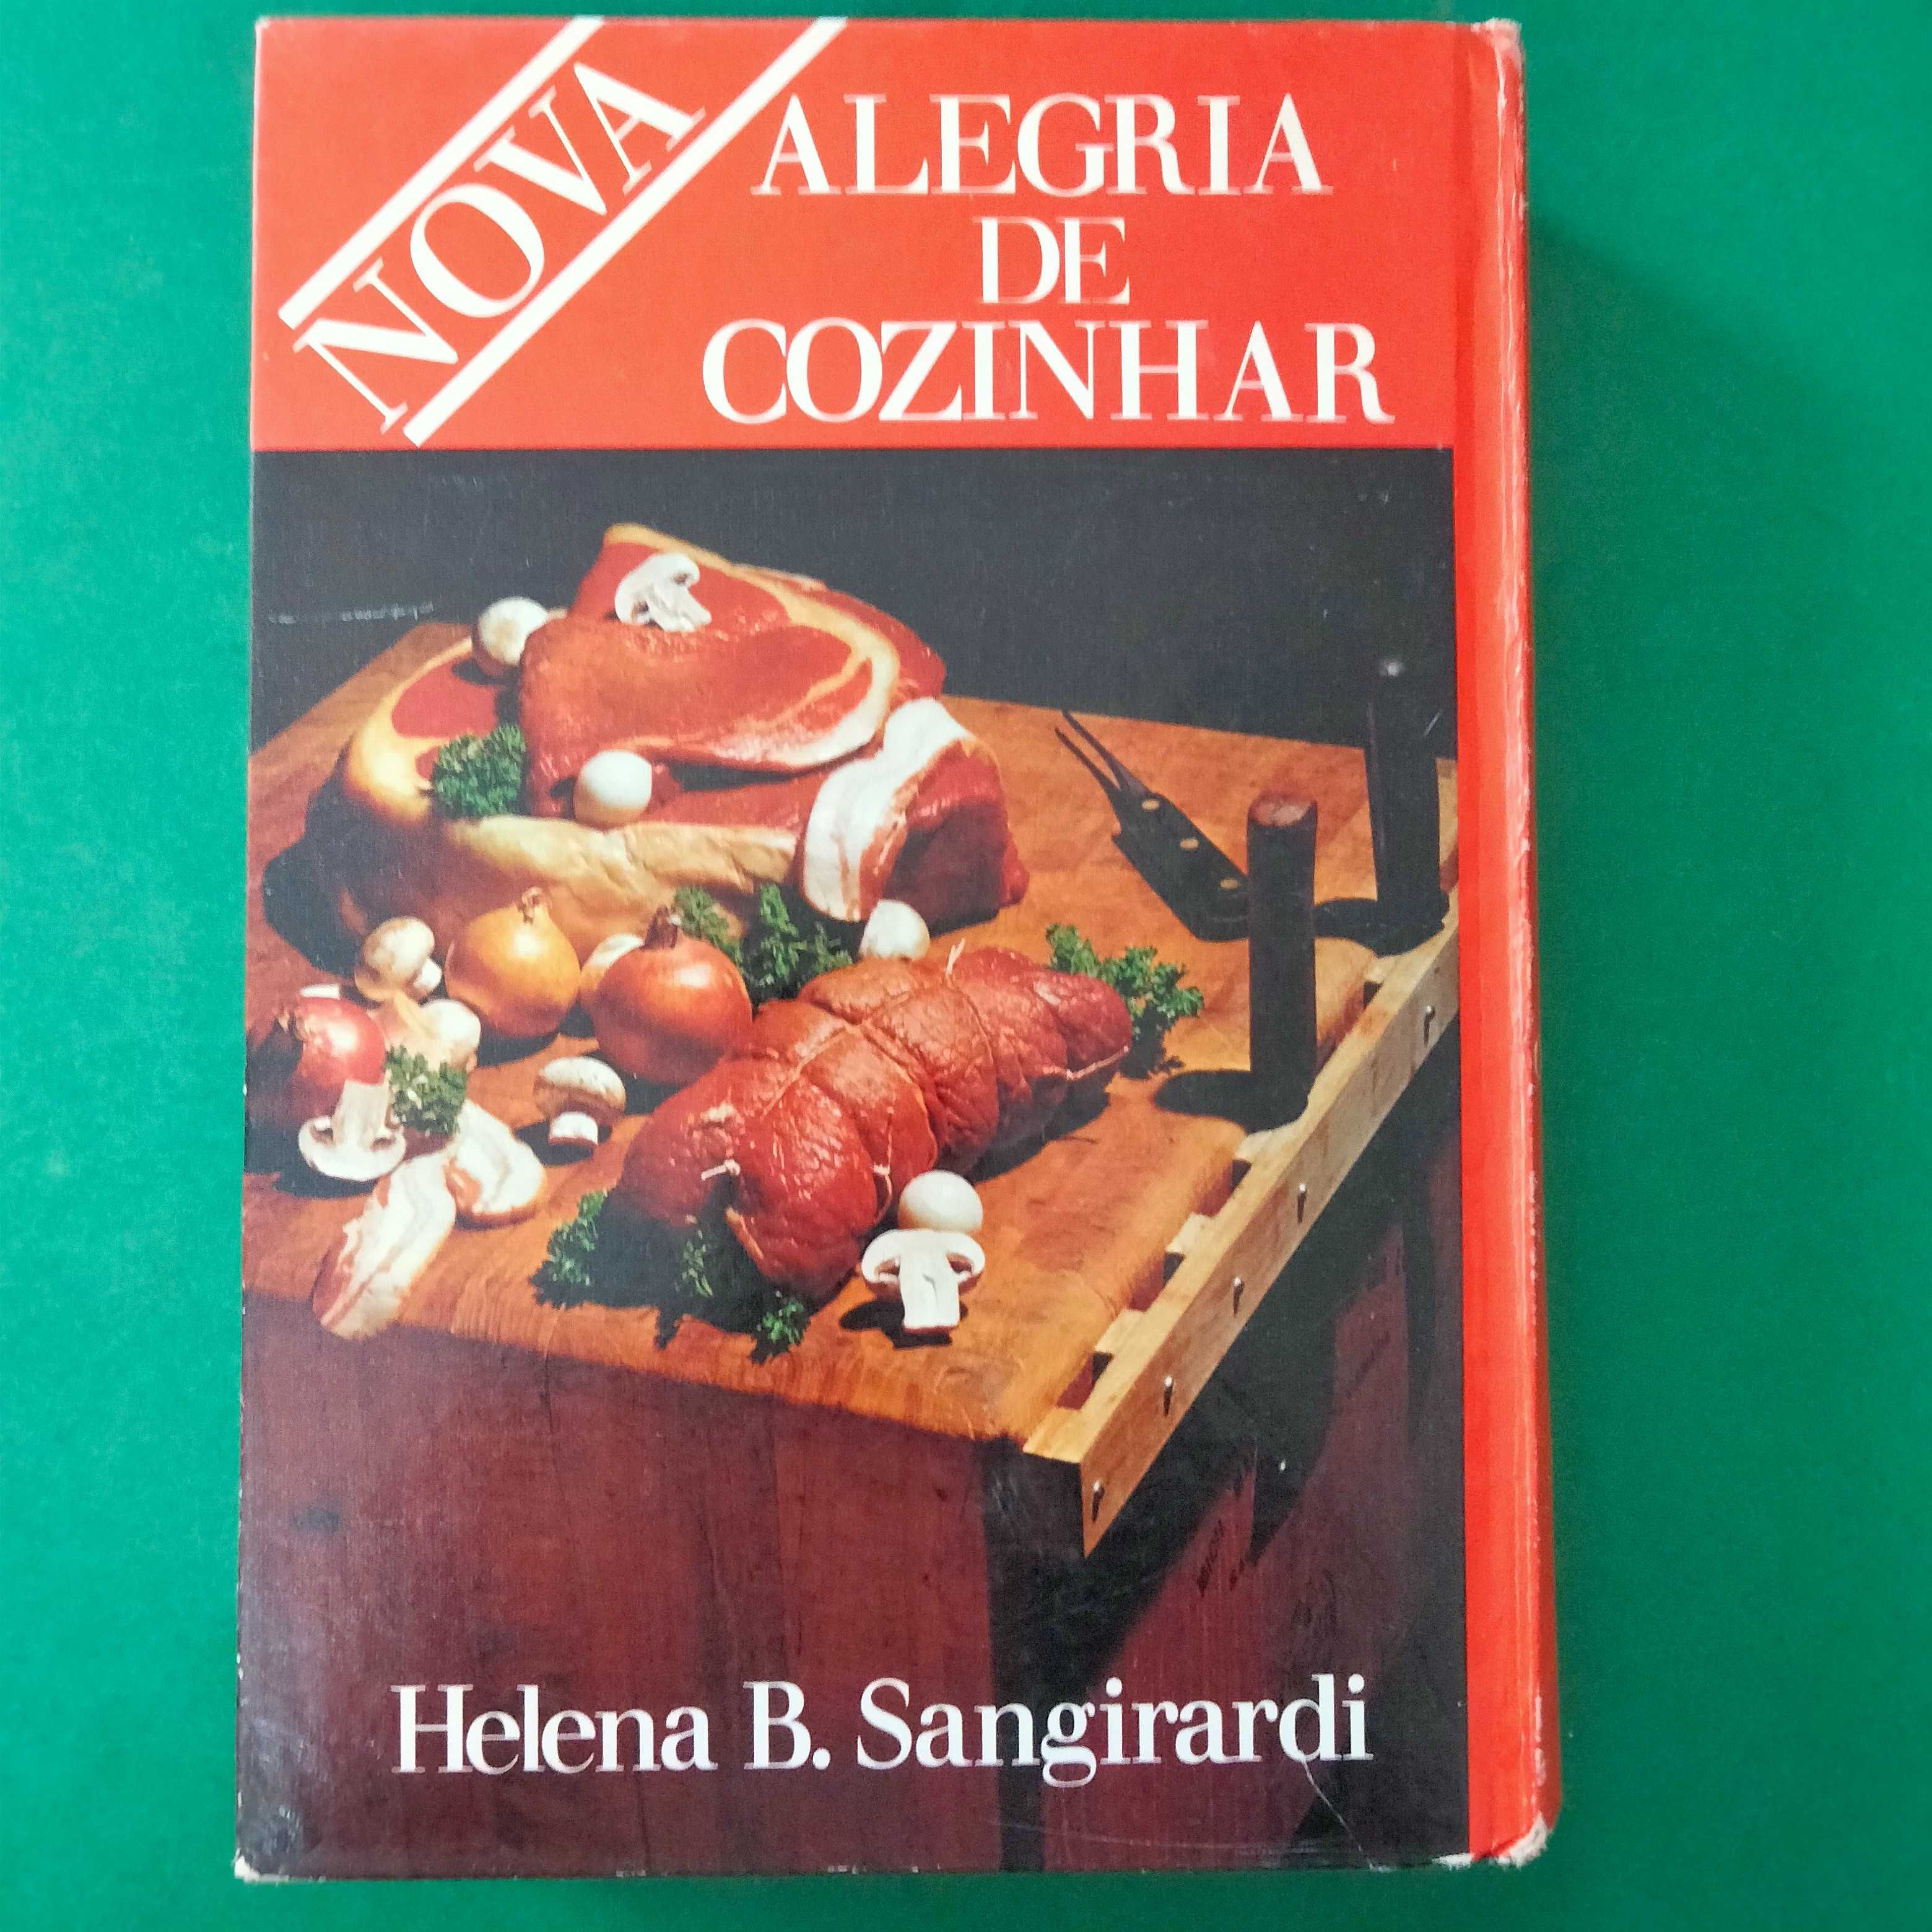 Nova Alegria de Cozinhar - Helena B. Sangirardi